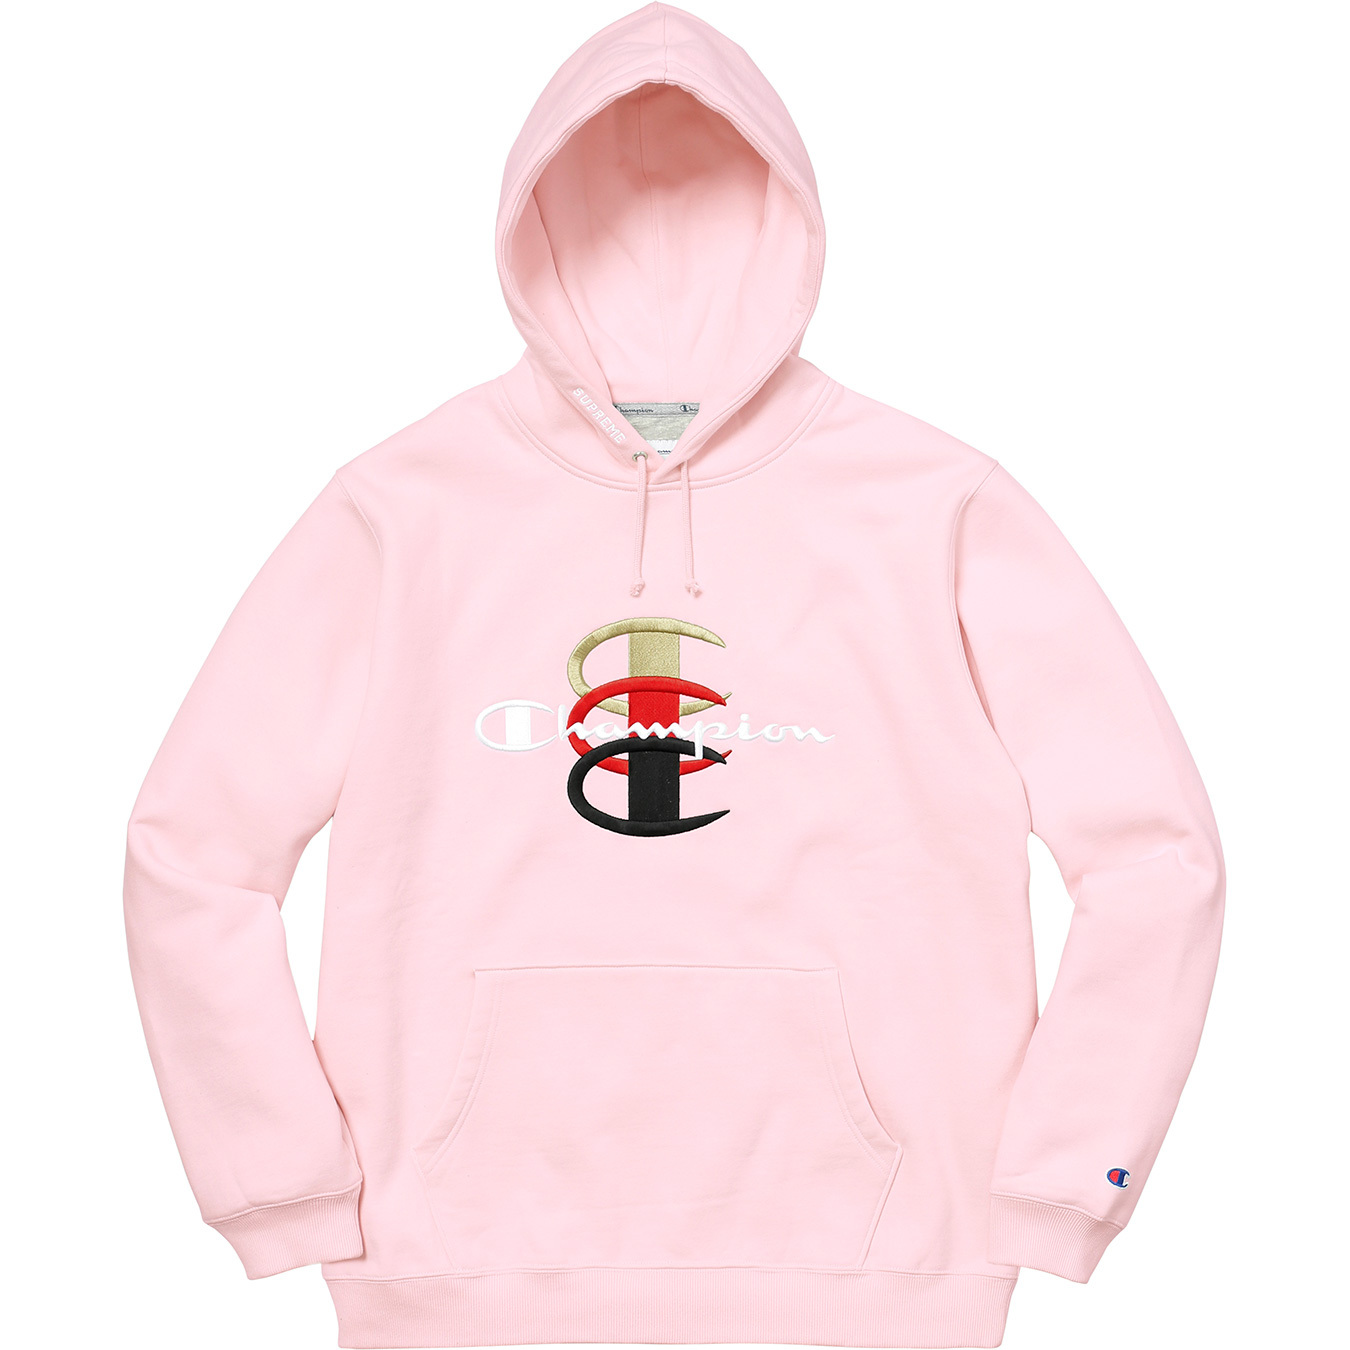 Supreme Champion Stacked C Hooded Sweatshirt Light Pink - FW17 